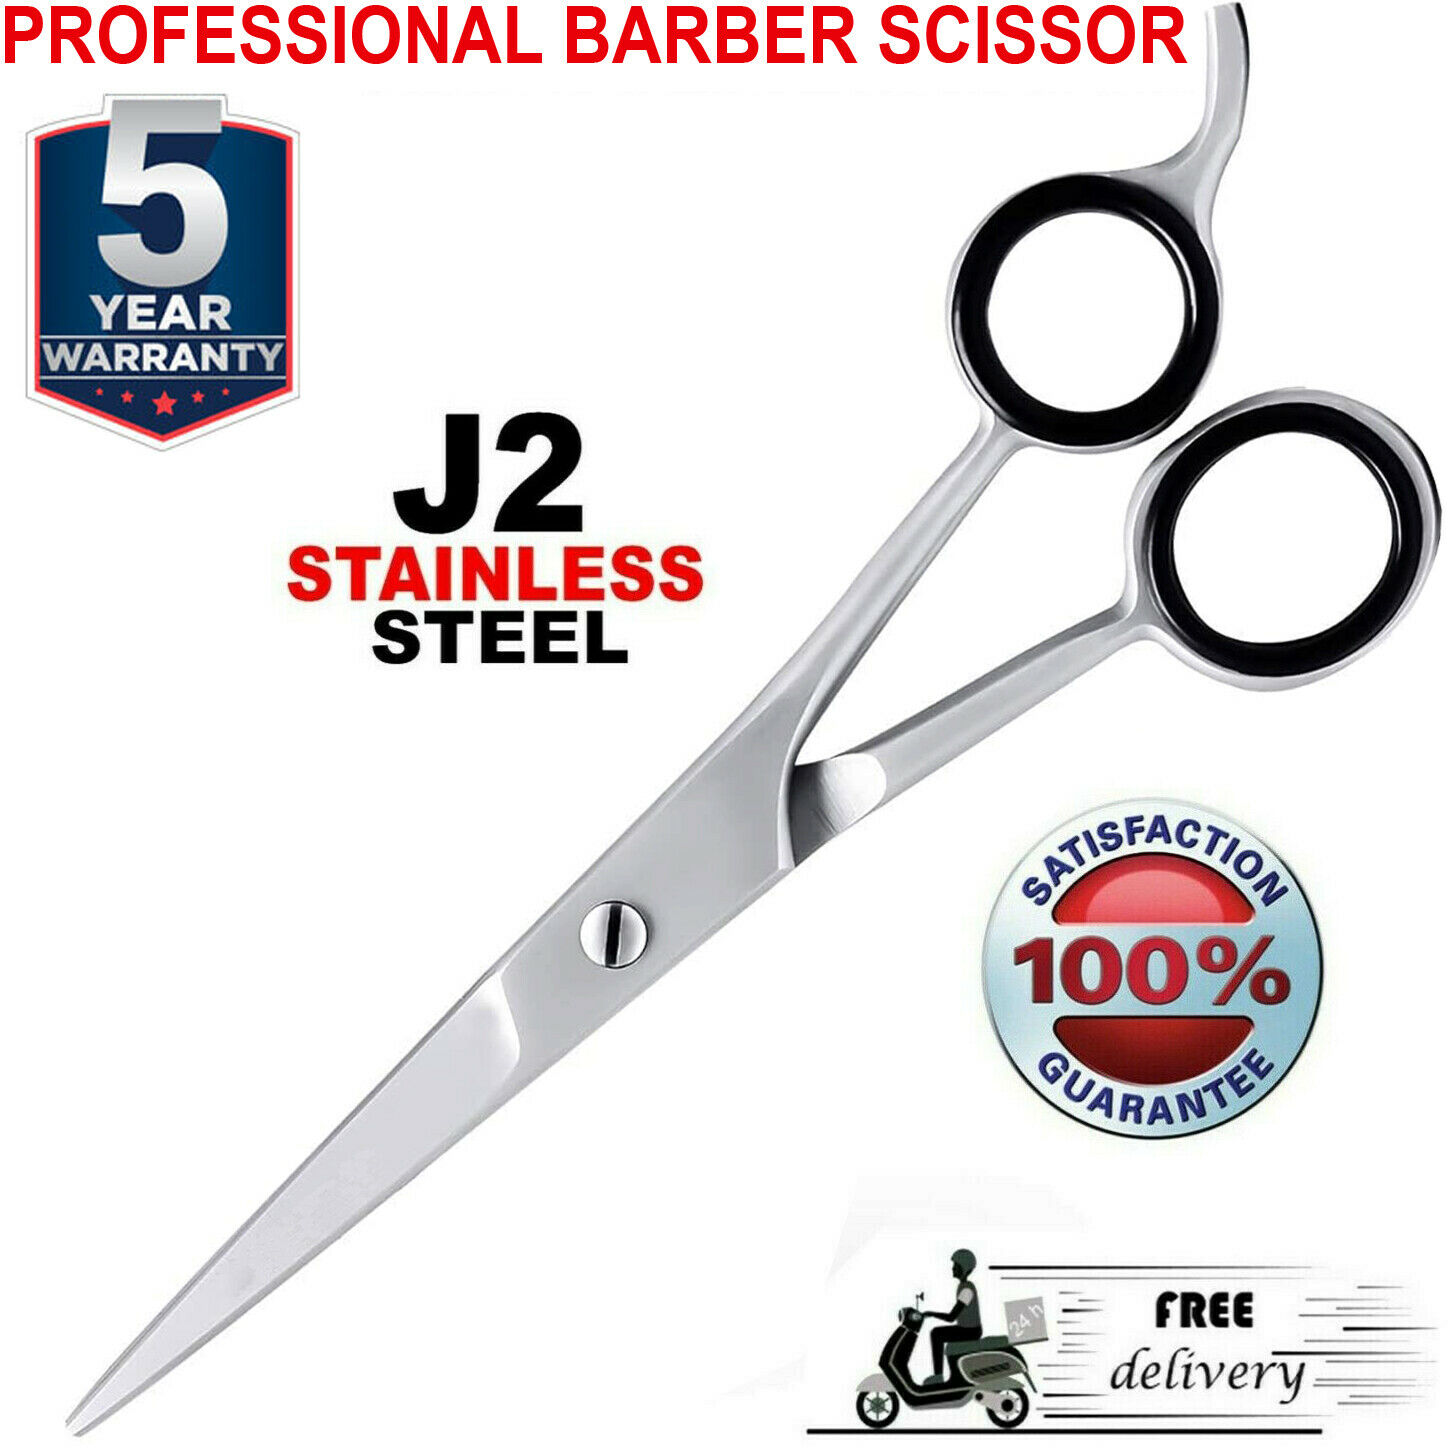 Professional German Barber Hair Cutting Scissors Shears Size 6.5" Brand New